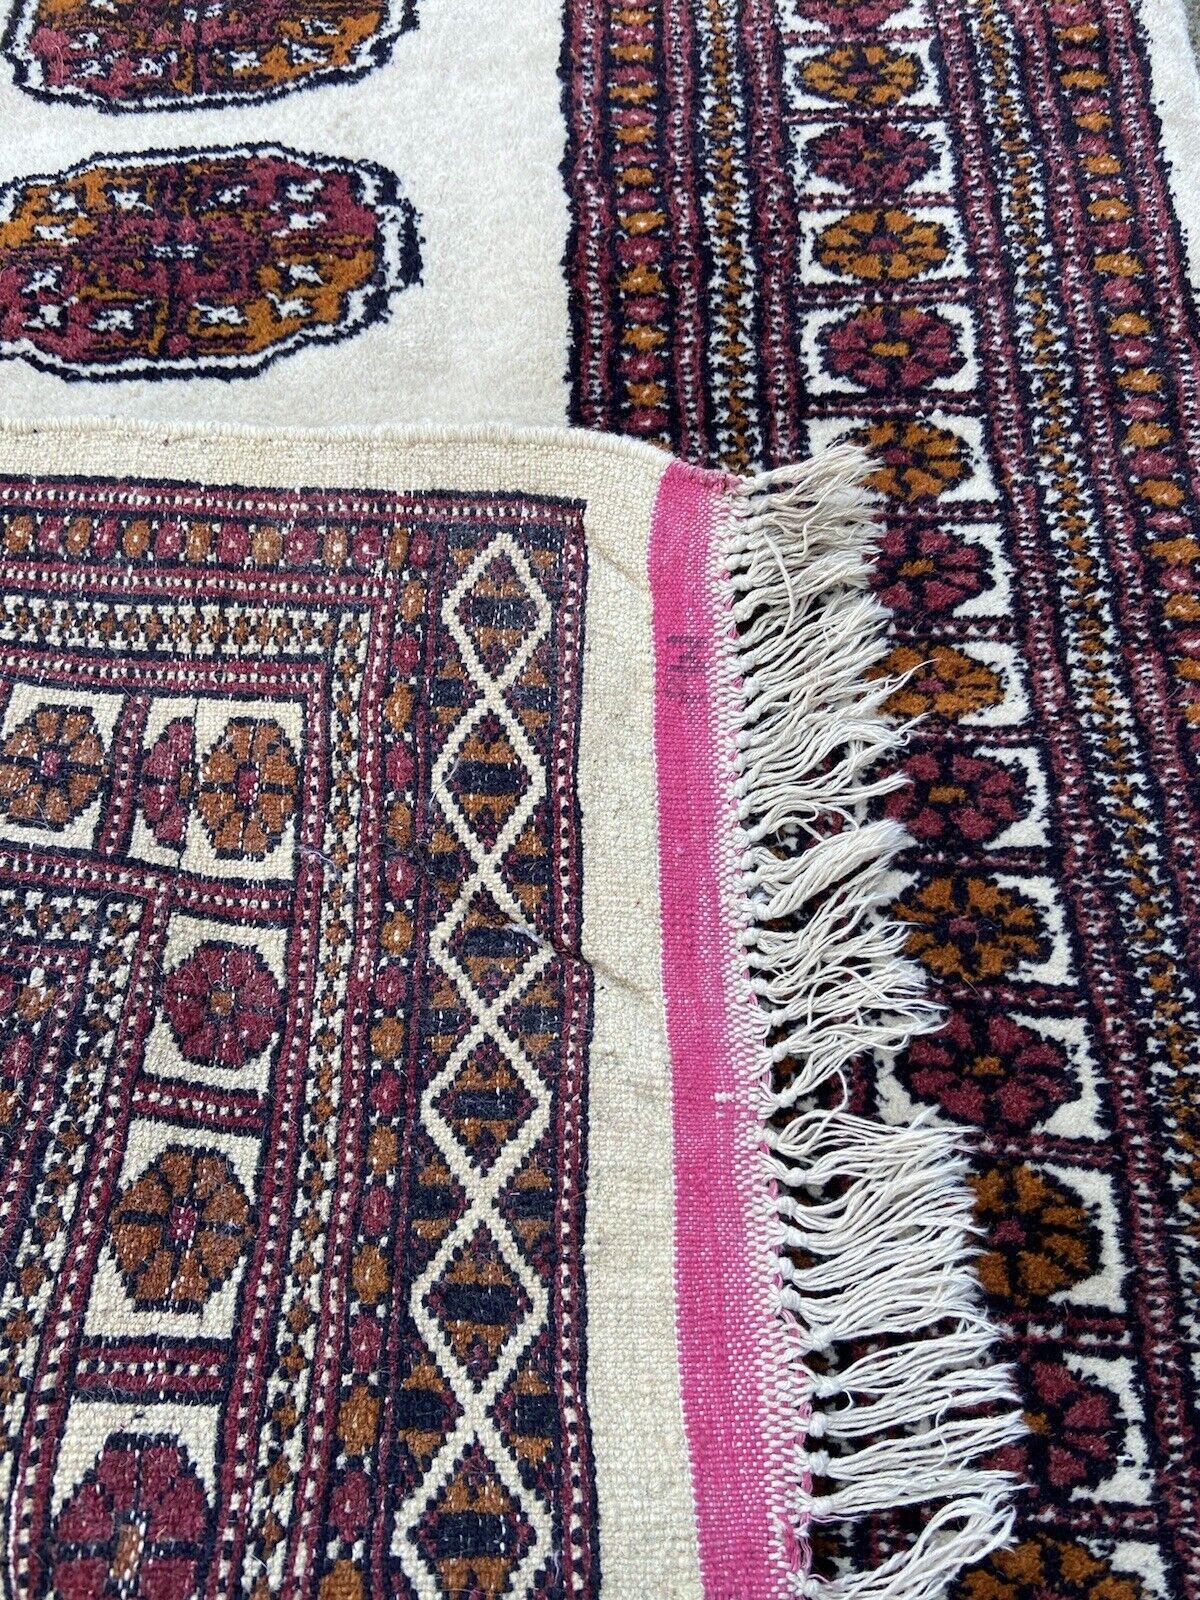 Mid-20th Century Handmade Vintage Uzbek Bukhara Rug 2.7' x 4.3', 1960s - 1S09 For Sale